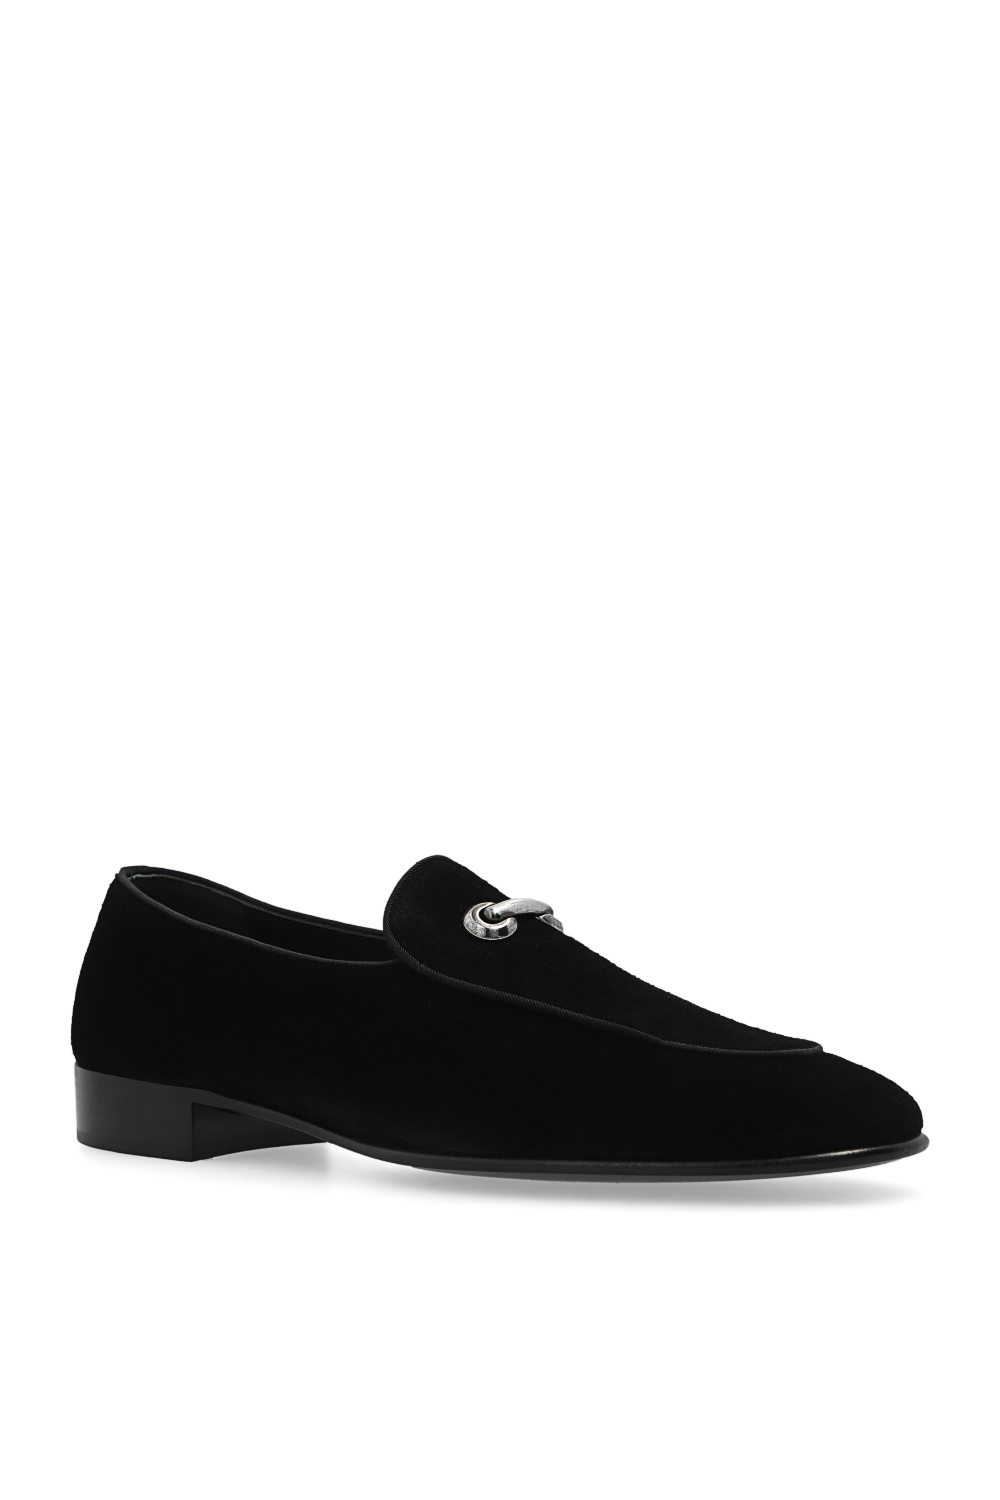 Giuseppe Zanotti 'Archibald' loafers | Rick Owens chunky-sole leather boots  | Men's Shoes | StclaircomoShops